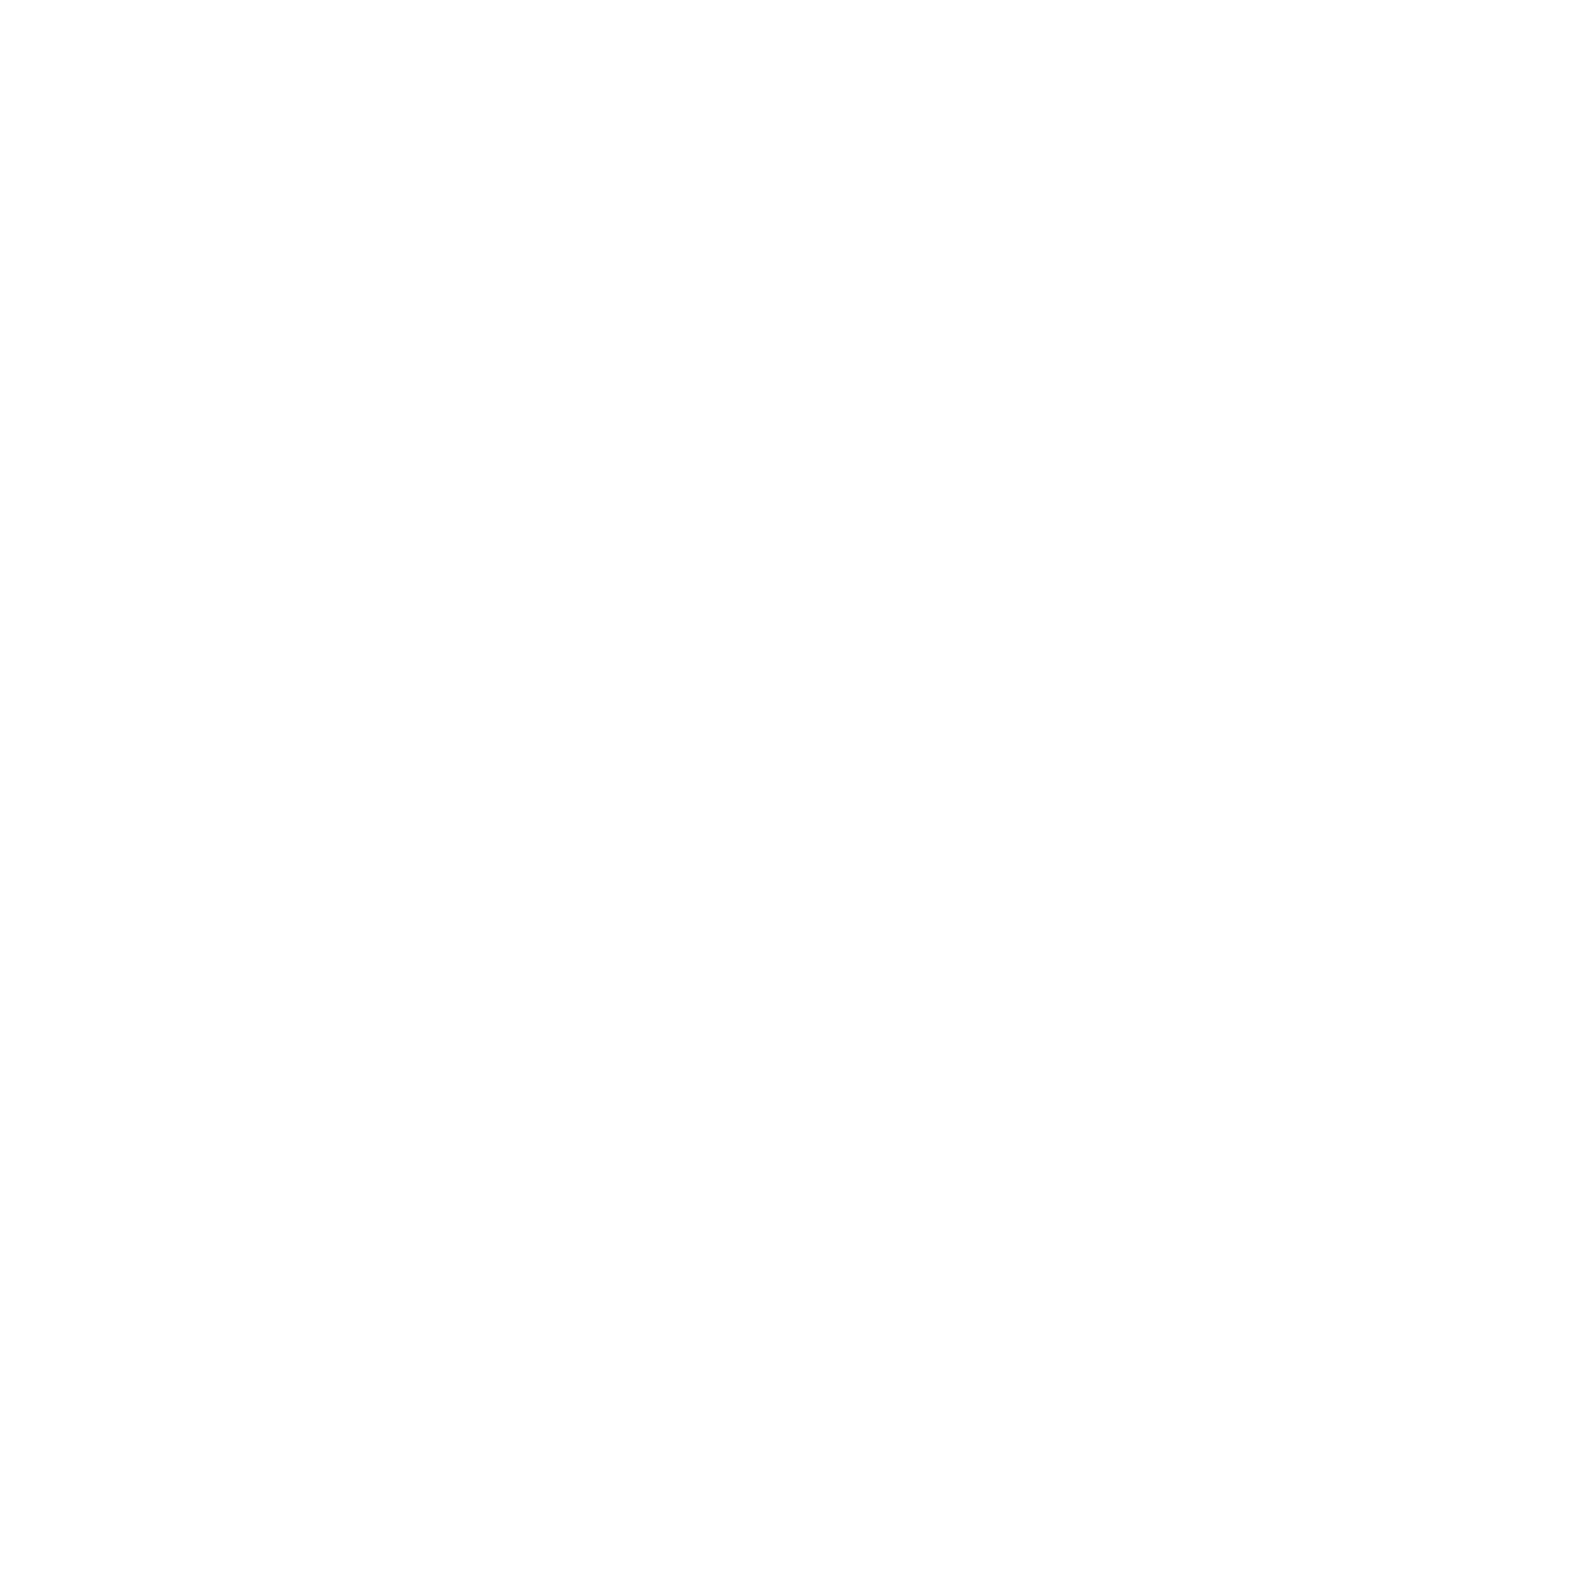 Alignment Healthcare logo for dark backgrounds (transparent PNG)